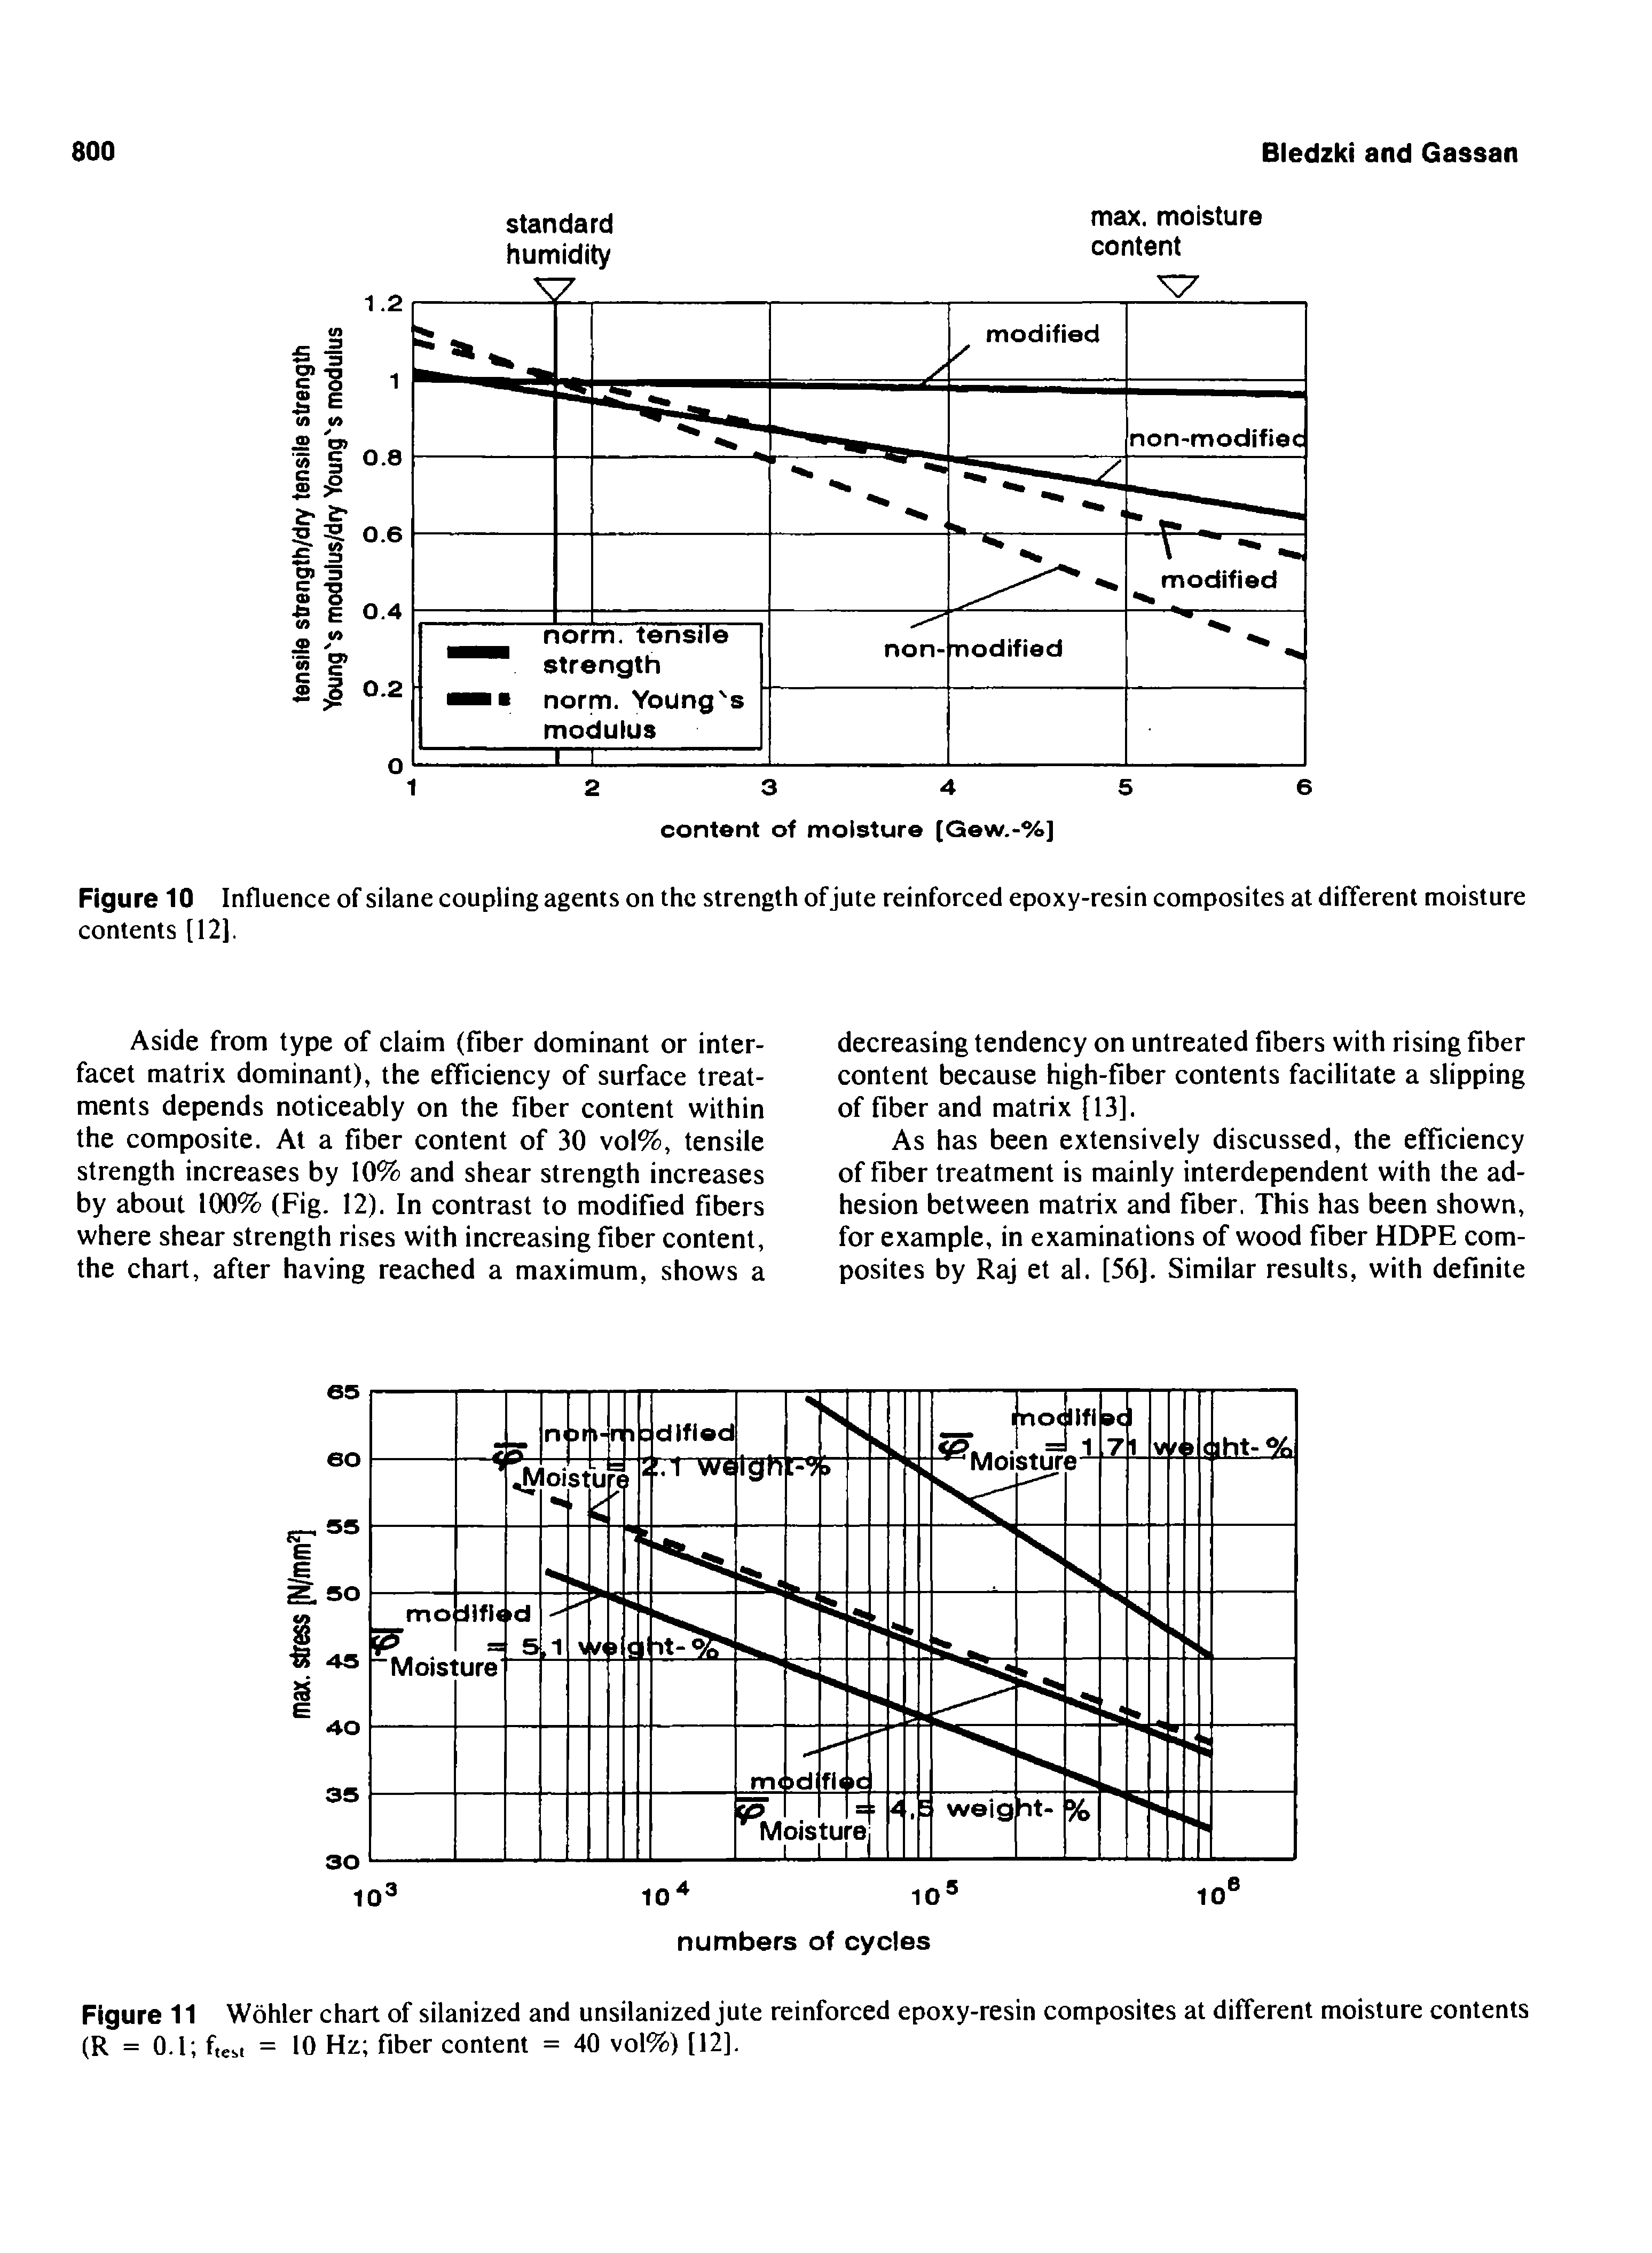 Figure 11 Wohler chart of silanized and unsilanized jute reinforced epoxy-resin composites at different moisture contents (R = O.l f,est = 10 Hz fiber content = 40 vol%) [12].